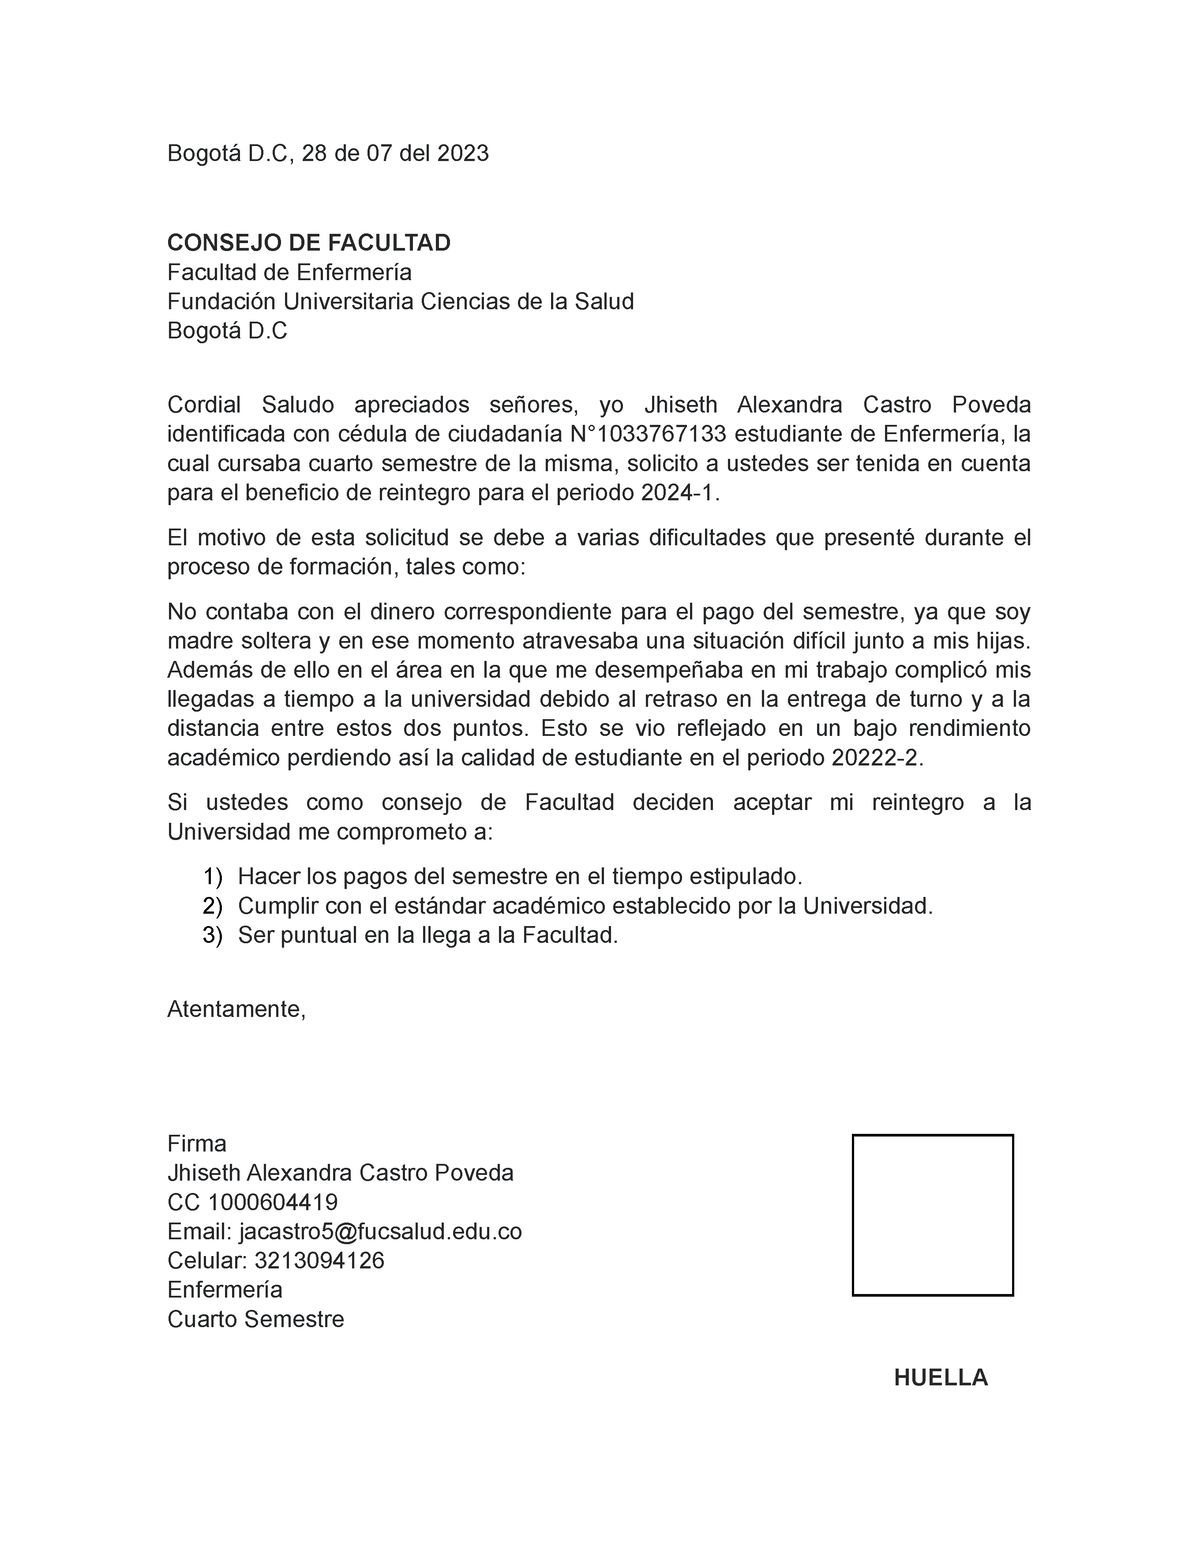 Modelo Carta De Reintegro Bogotá D 28 De 07 Del 2023 Consejo De